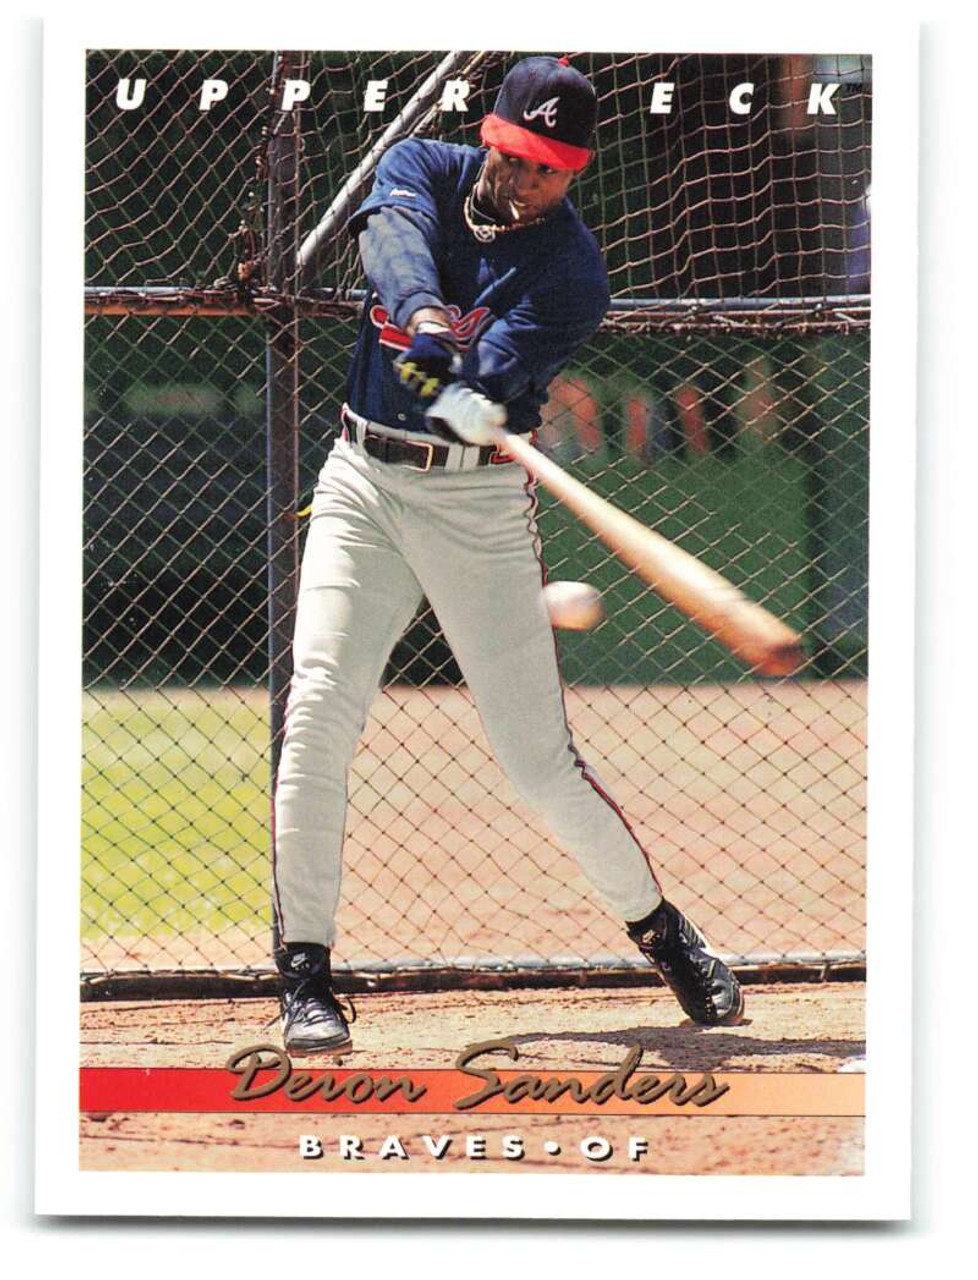 Deion Sanders - Atlanta Braves - 1991 Upper Deck Card #247